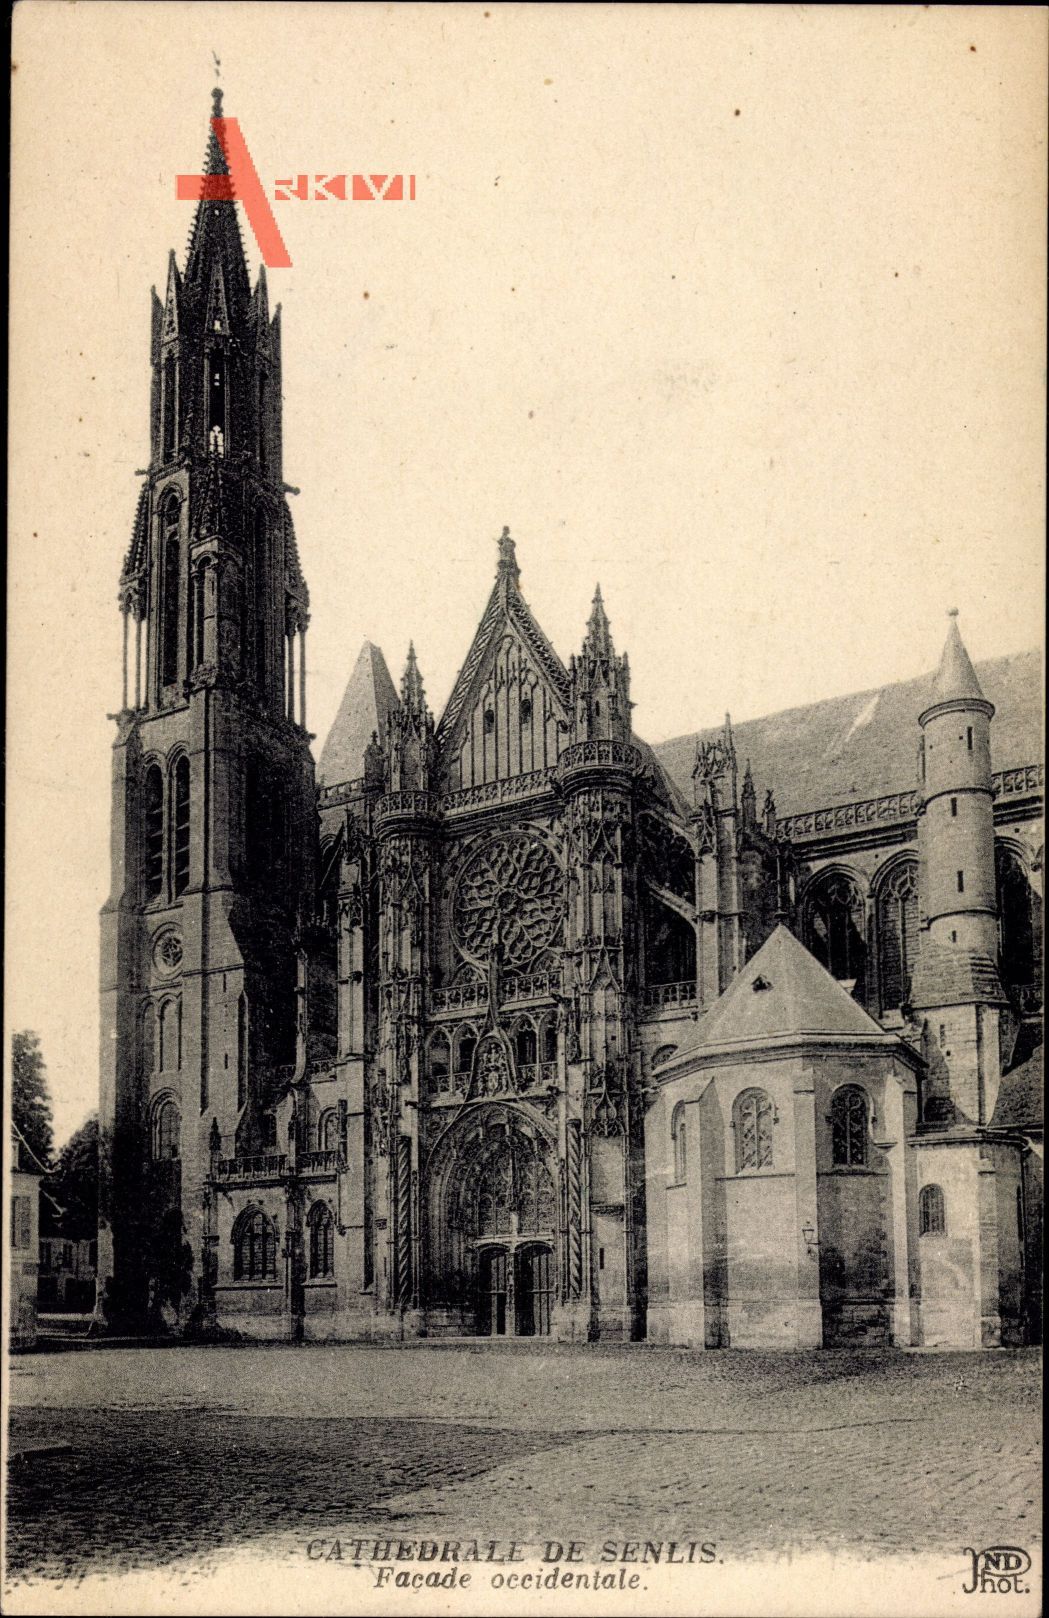 Senlis Oise, Cathédrale, Facade occidentale, Kathedrale